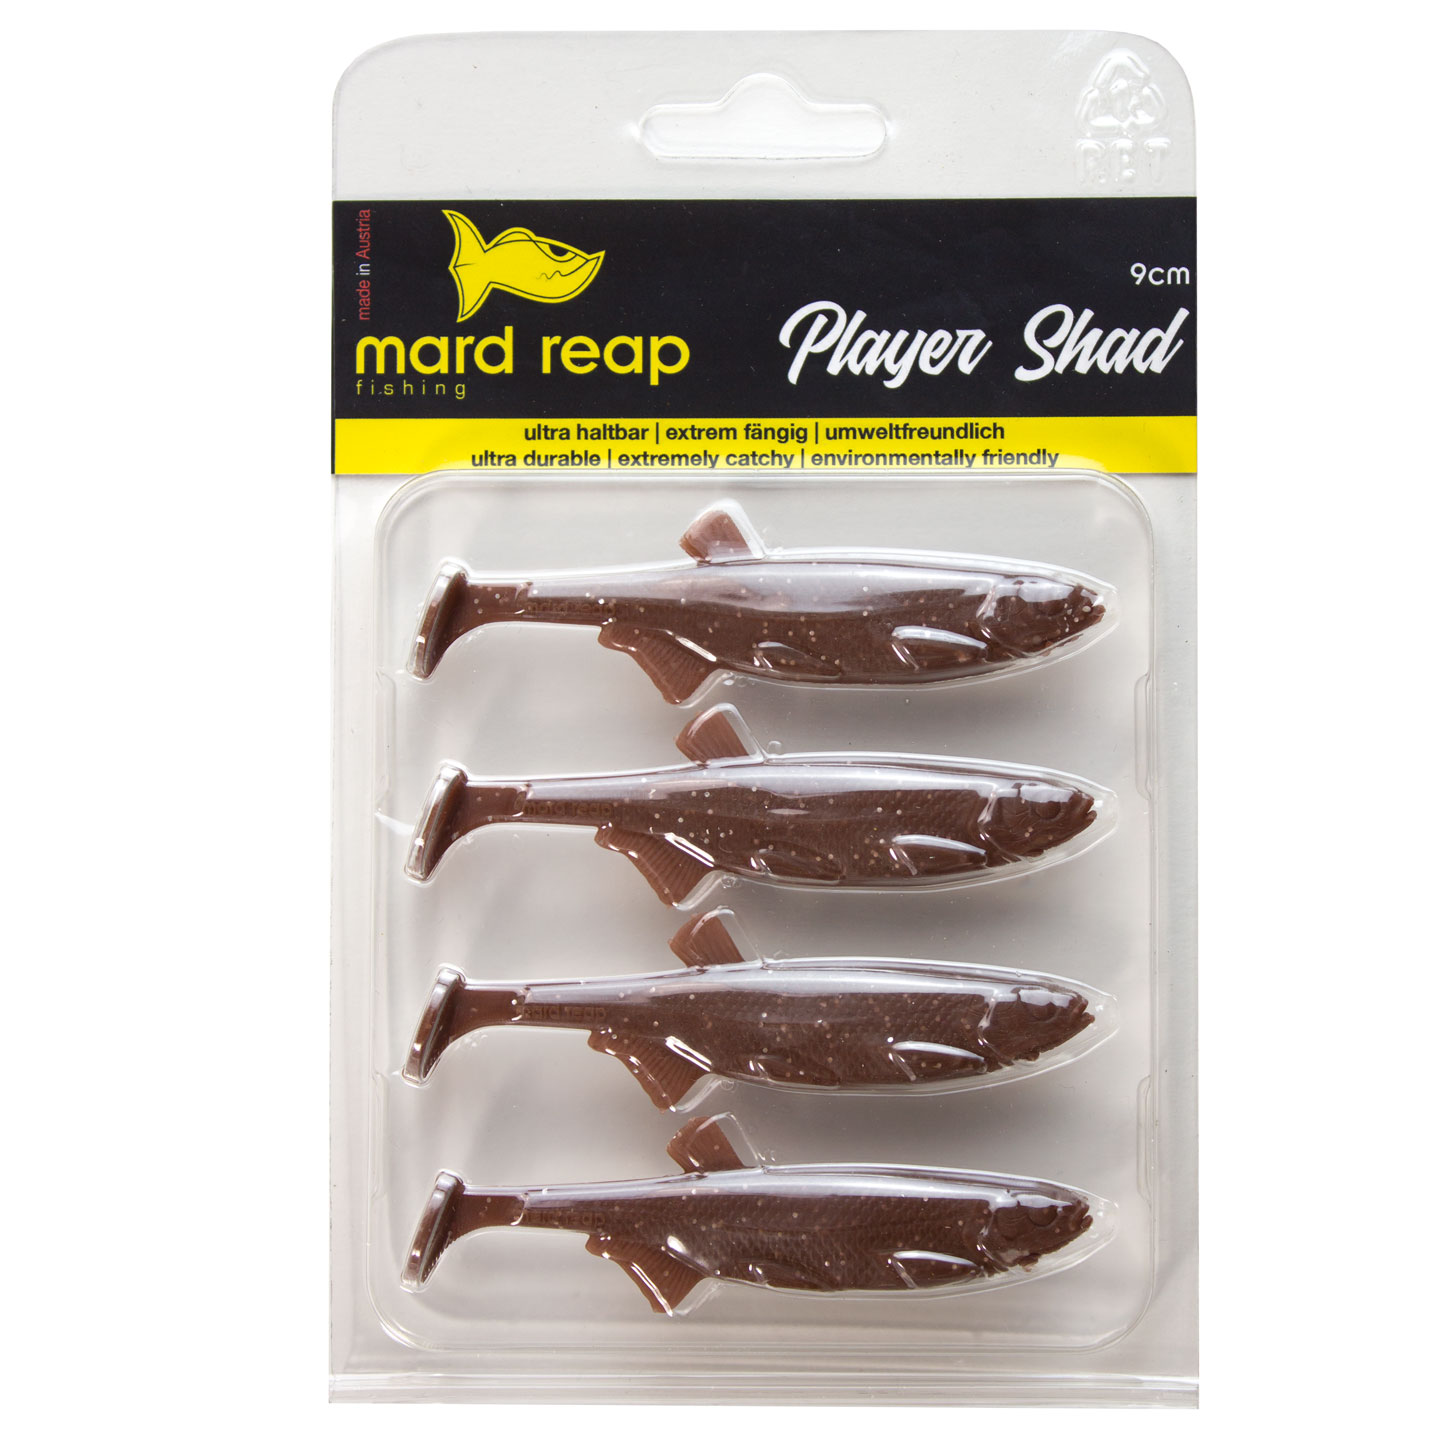 Mard Reap Player Shad; Chocolate; 9 cm